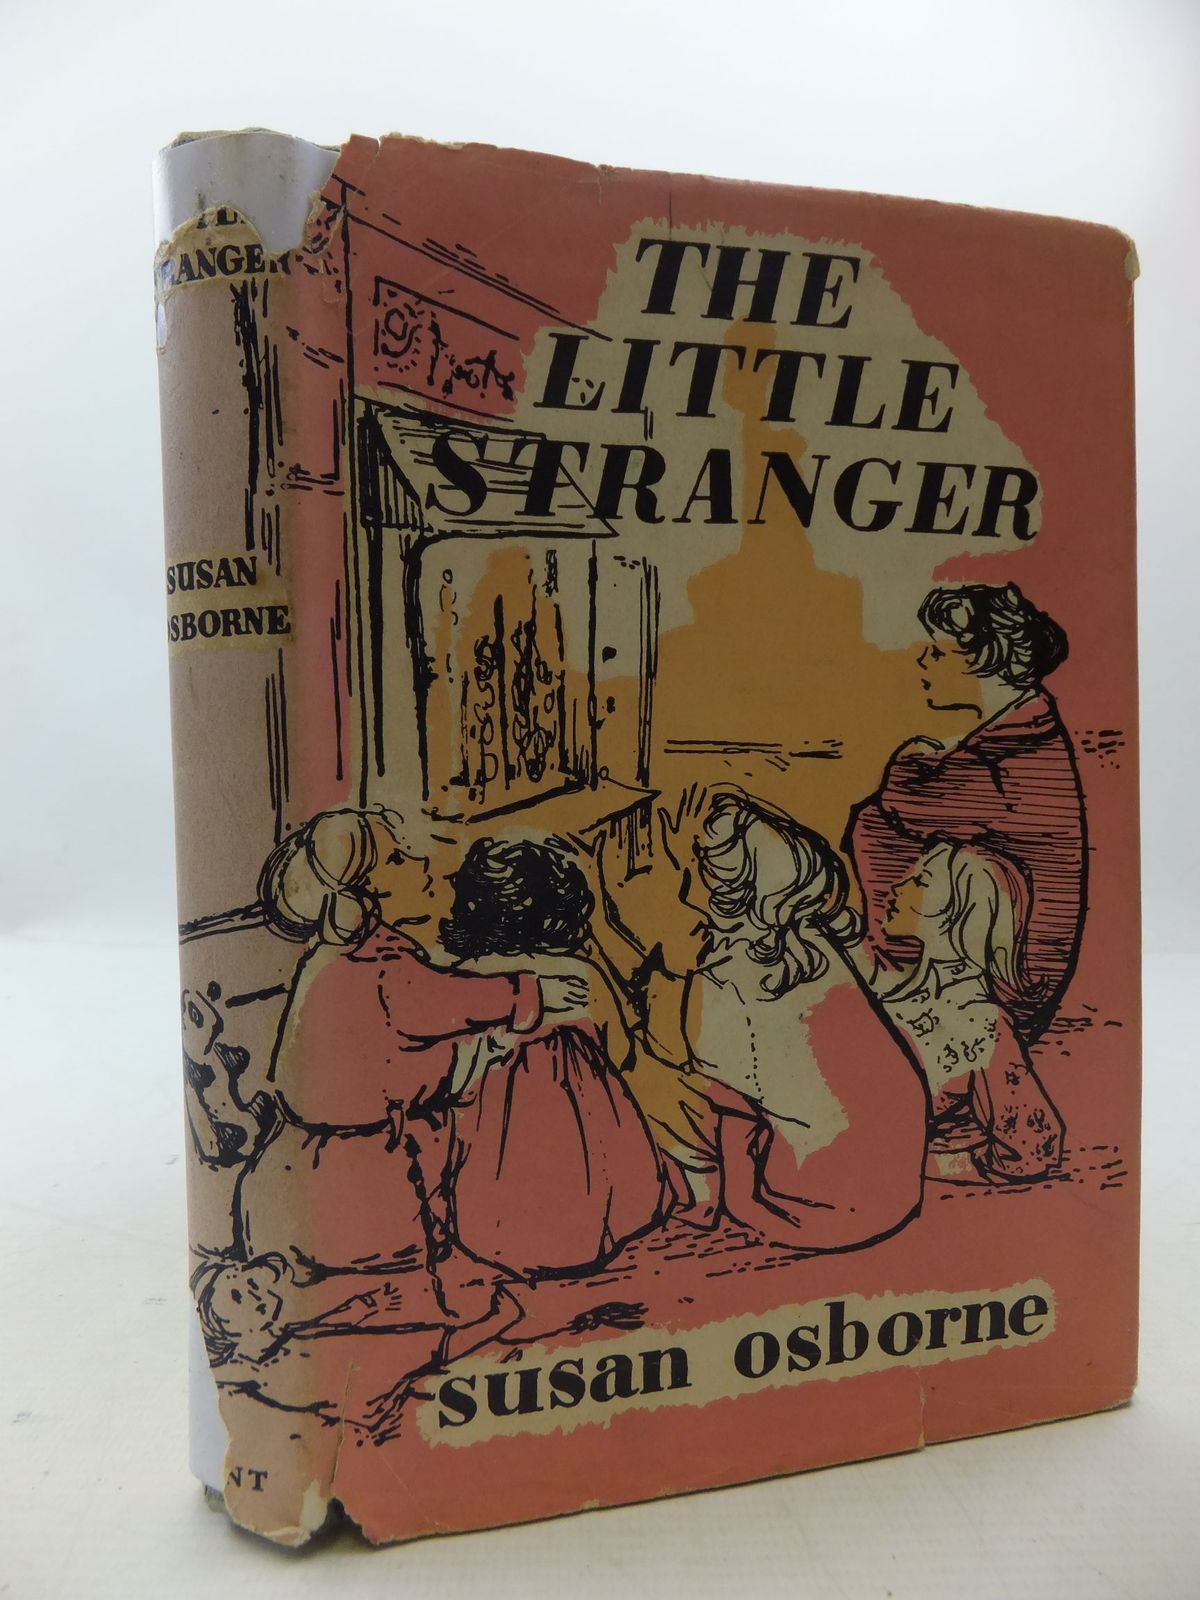 Cover of THE LITTLE STRANGER by Susan Osborne